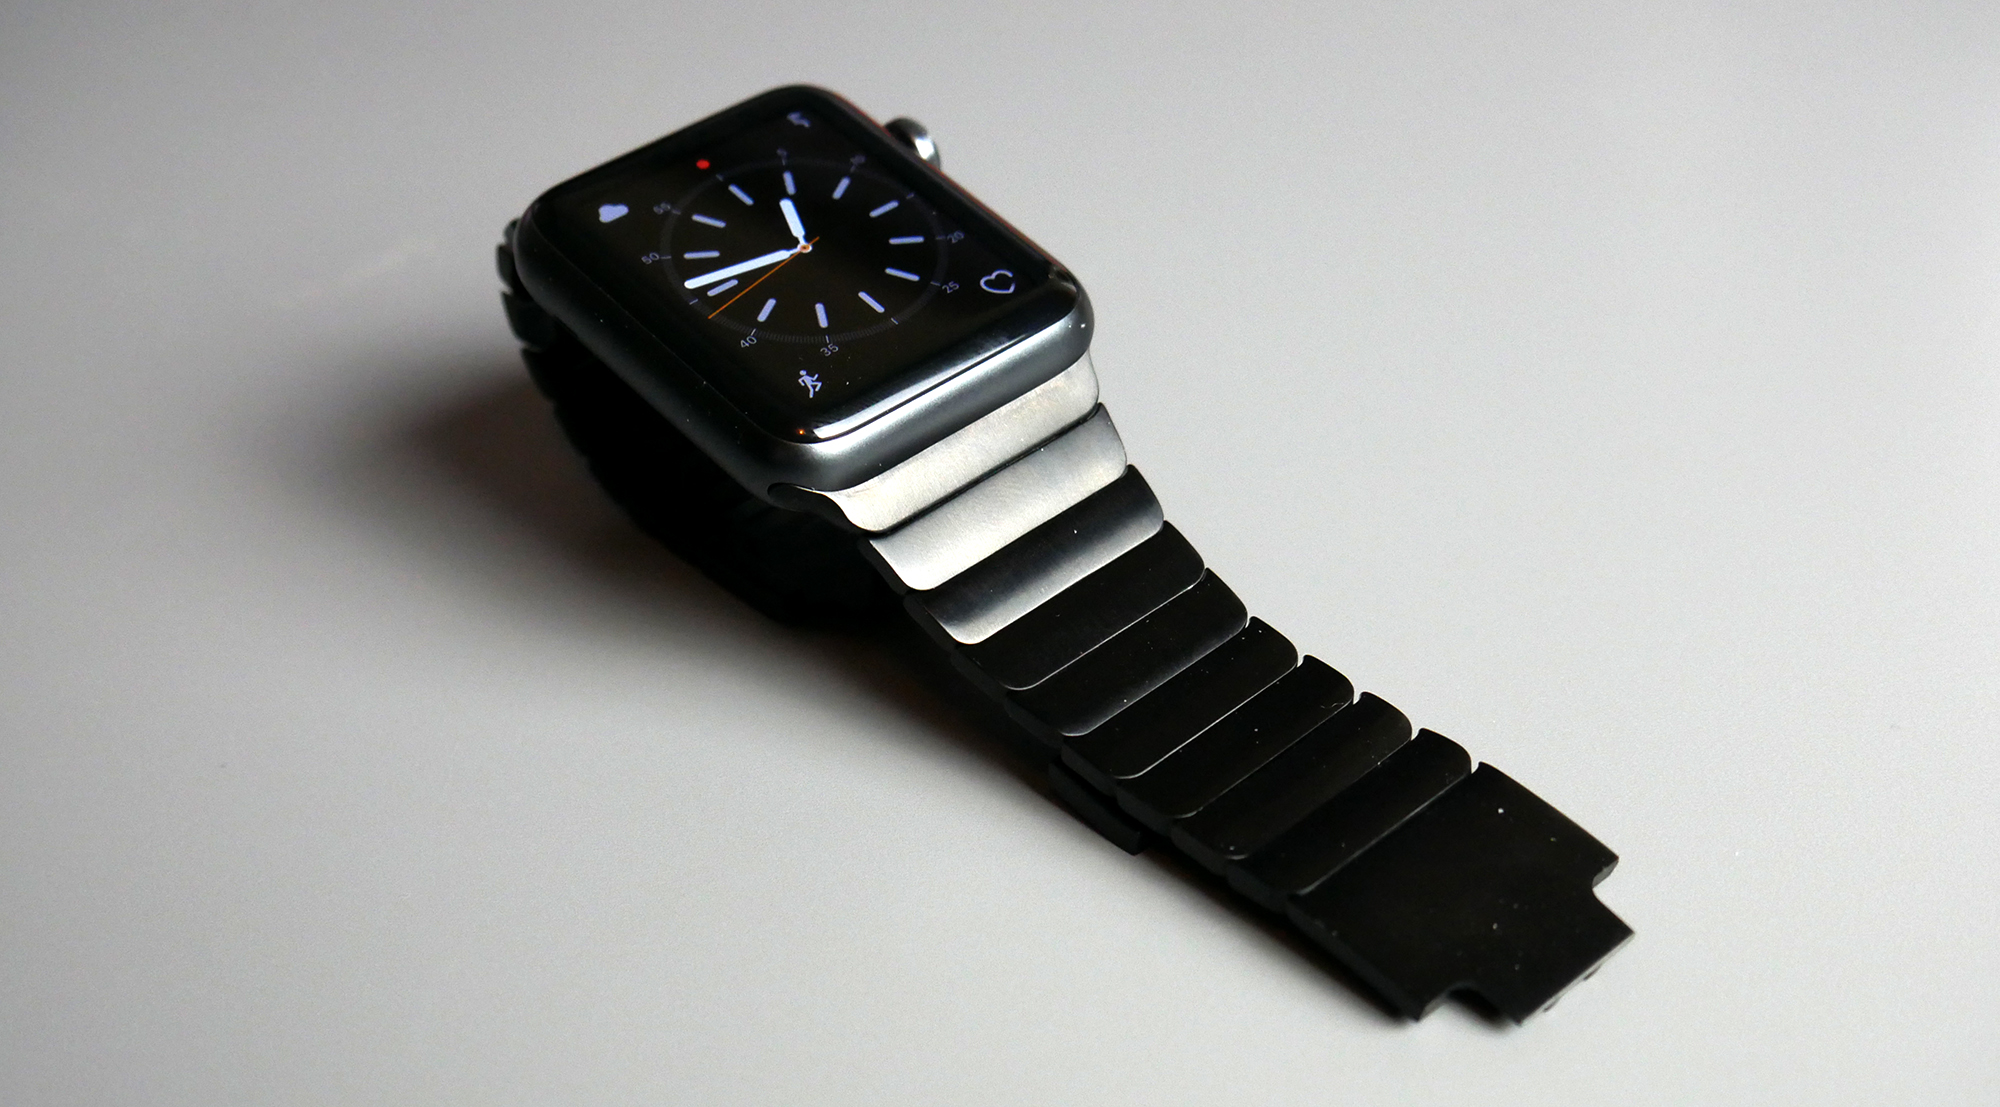 OULUOQI Apple Watch Link Bracelet Is An Affordable Alternative To Apple's Link  Bracelet (Review) - iOS Hacker